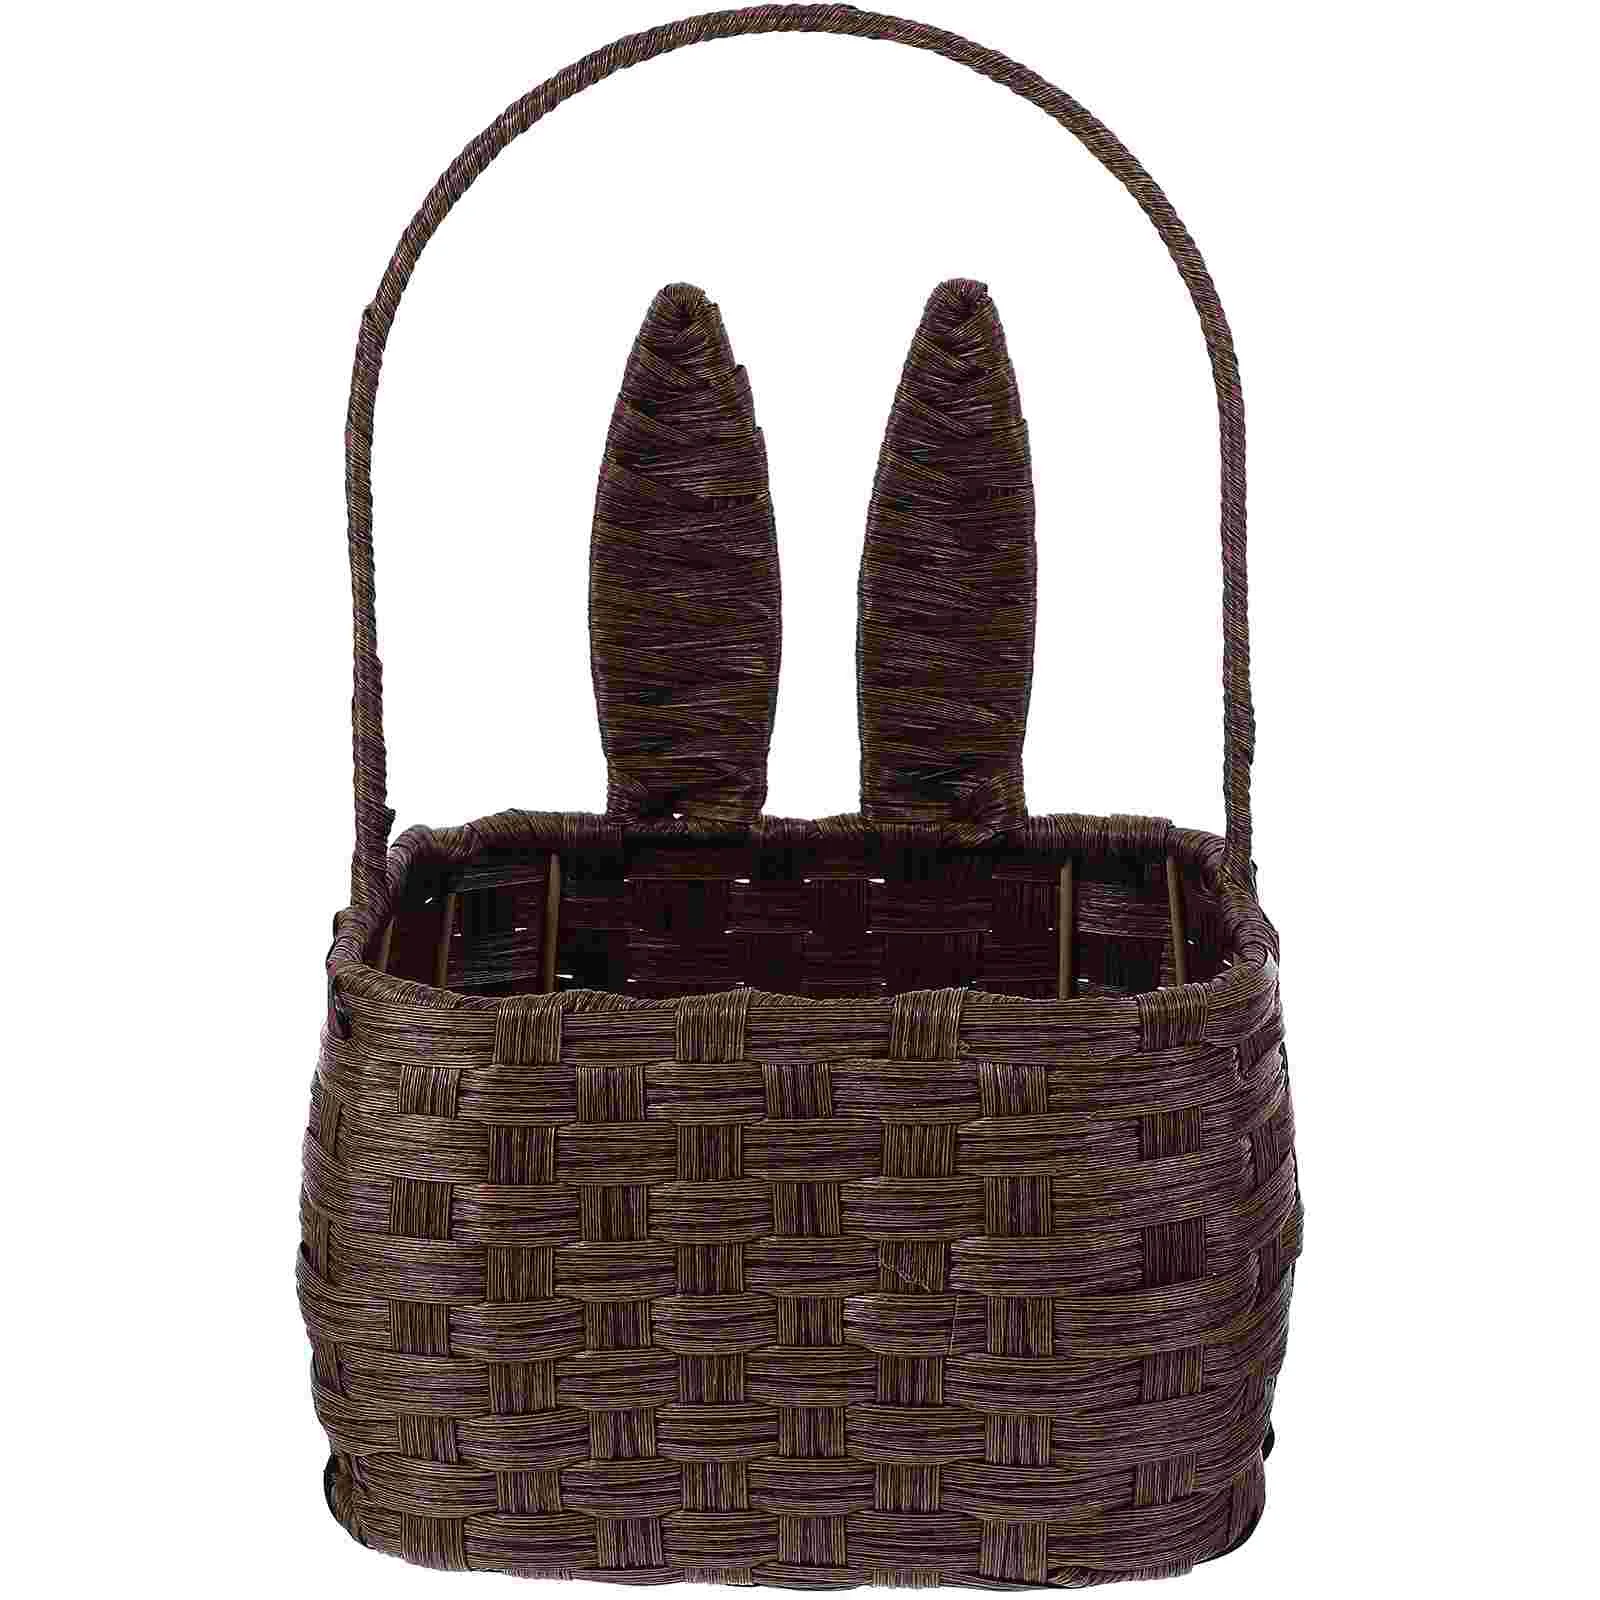 

Basket Storage Baskets Easter Wicker Rattan Woven Handles Bins Shelf Fruit Seagrass Bunny Bread Snack Nesting Closet Organizing